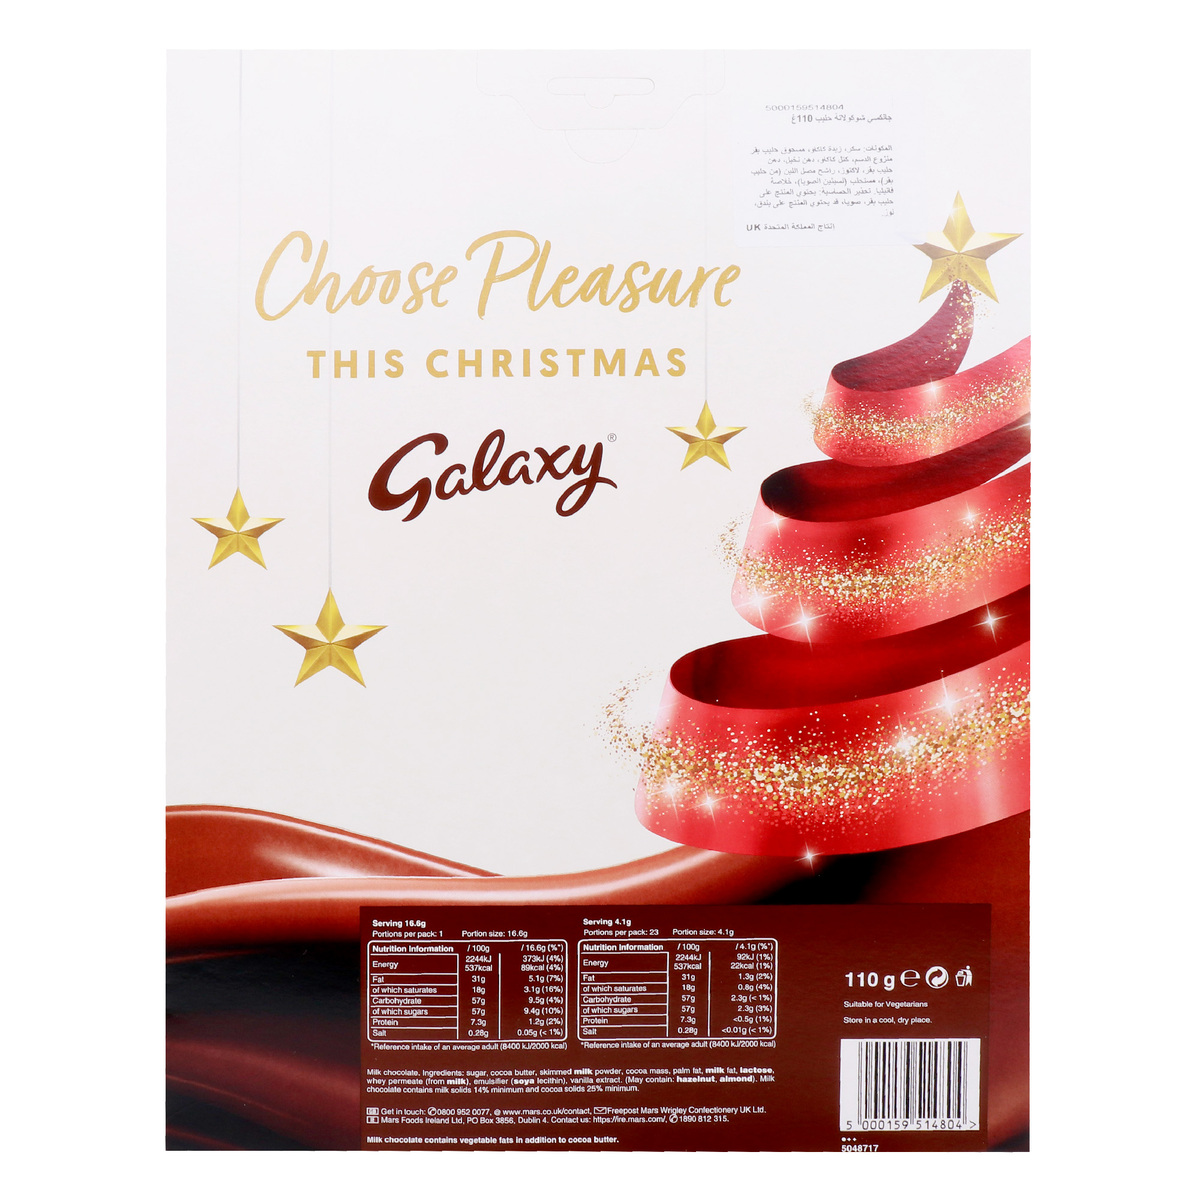 Galaxy Smooth Chocolate Advent Calendar 110 g